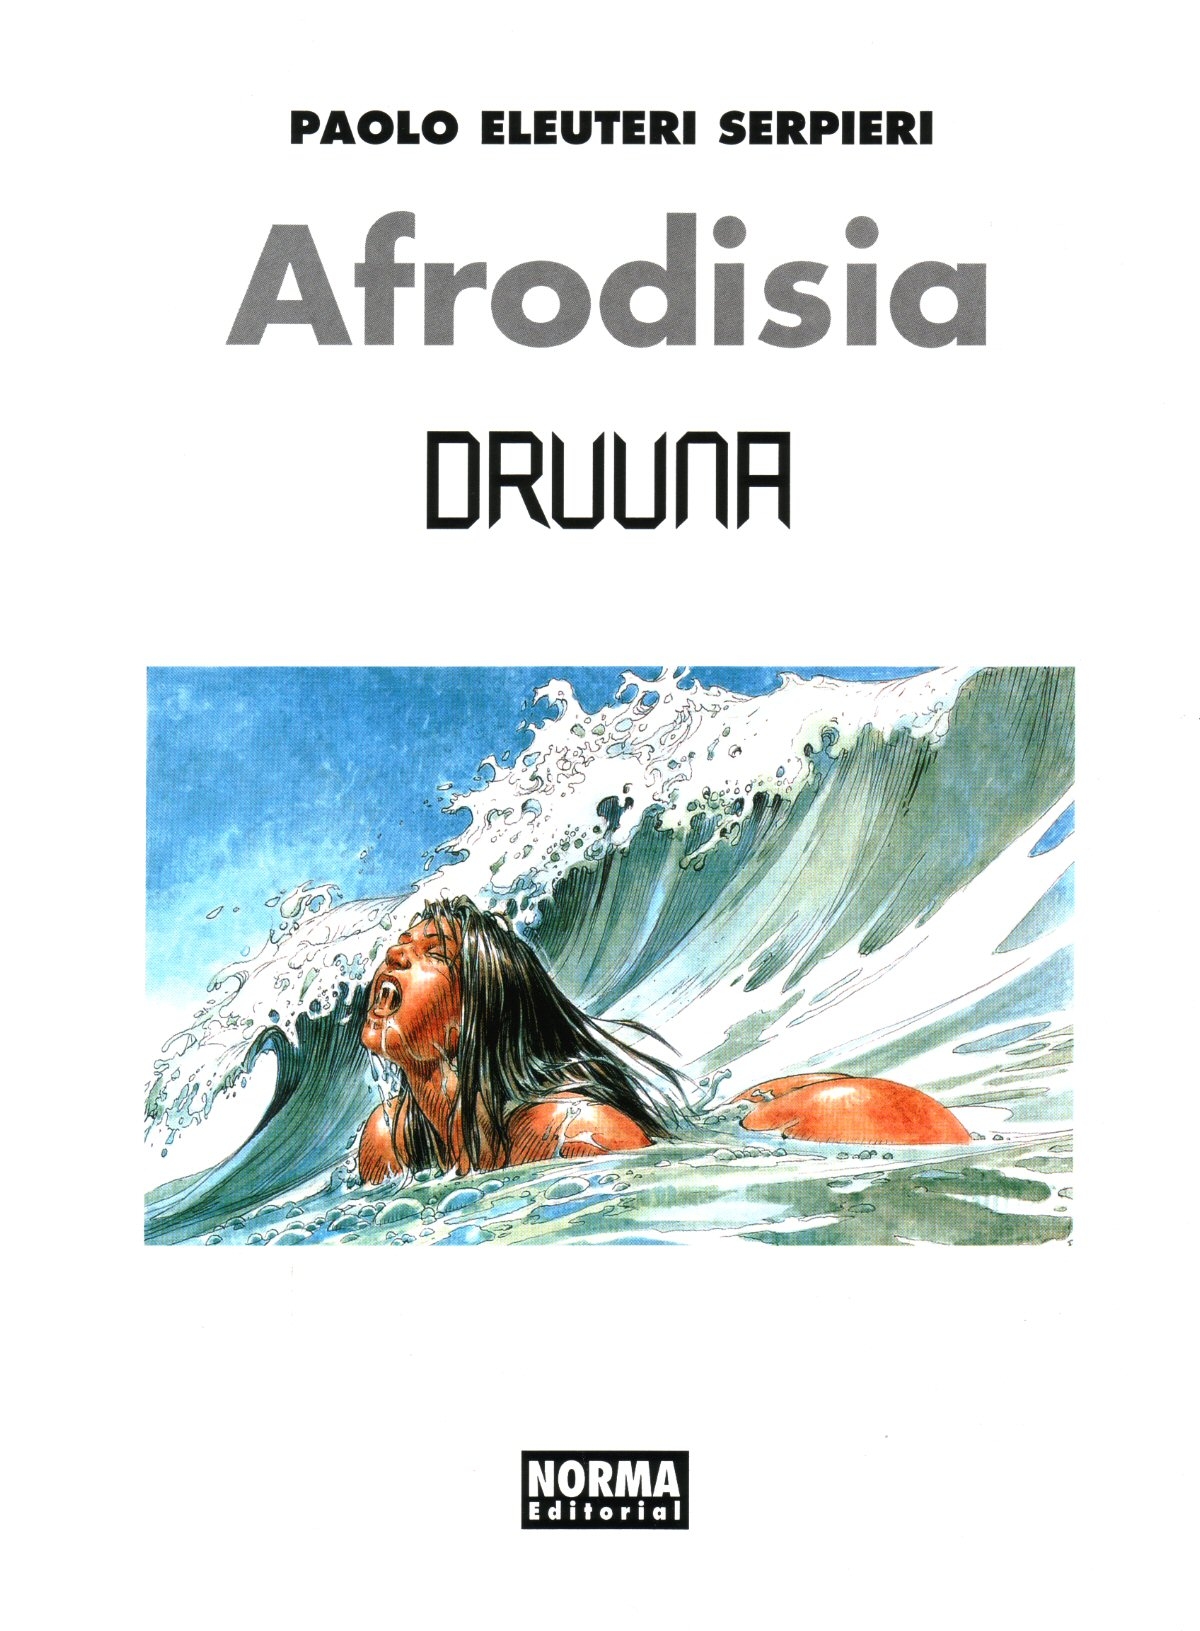 [Paolo Eleuteri Serpieri] Druuna 6 - Afrodisia [Spanish] 1